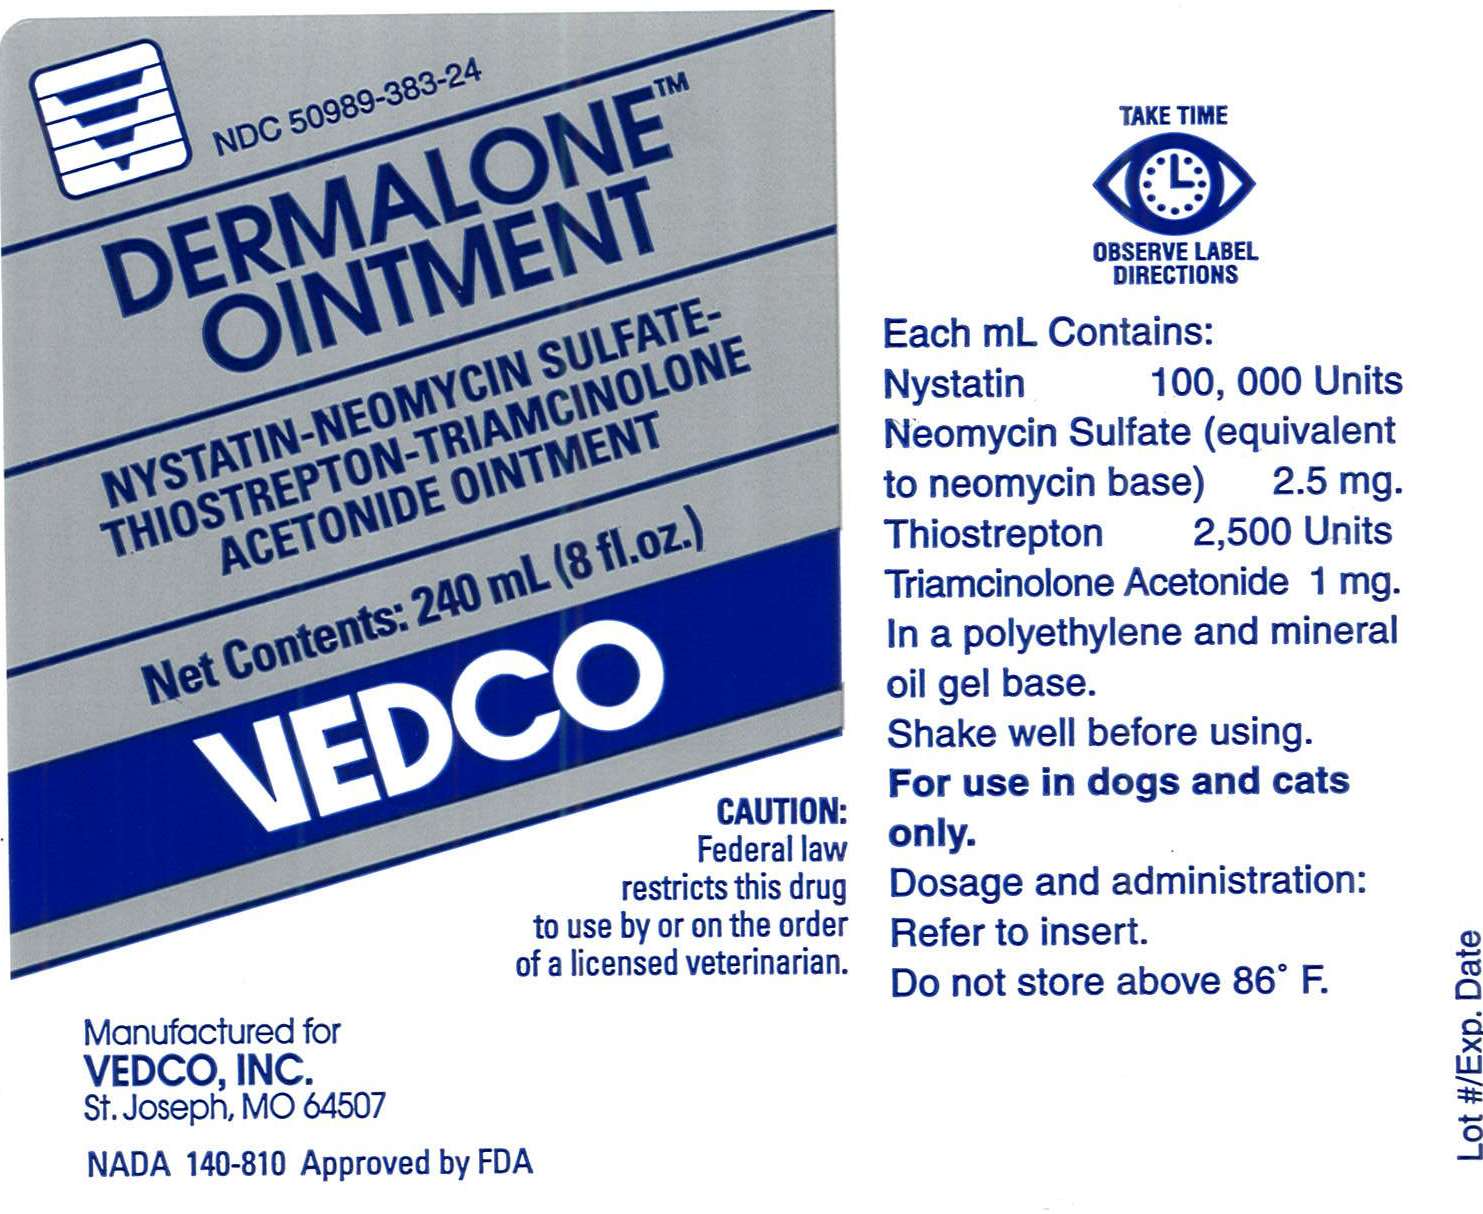 Dermalone Ointment 240 mL